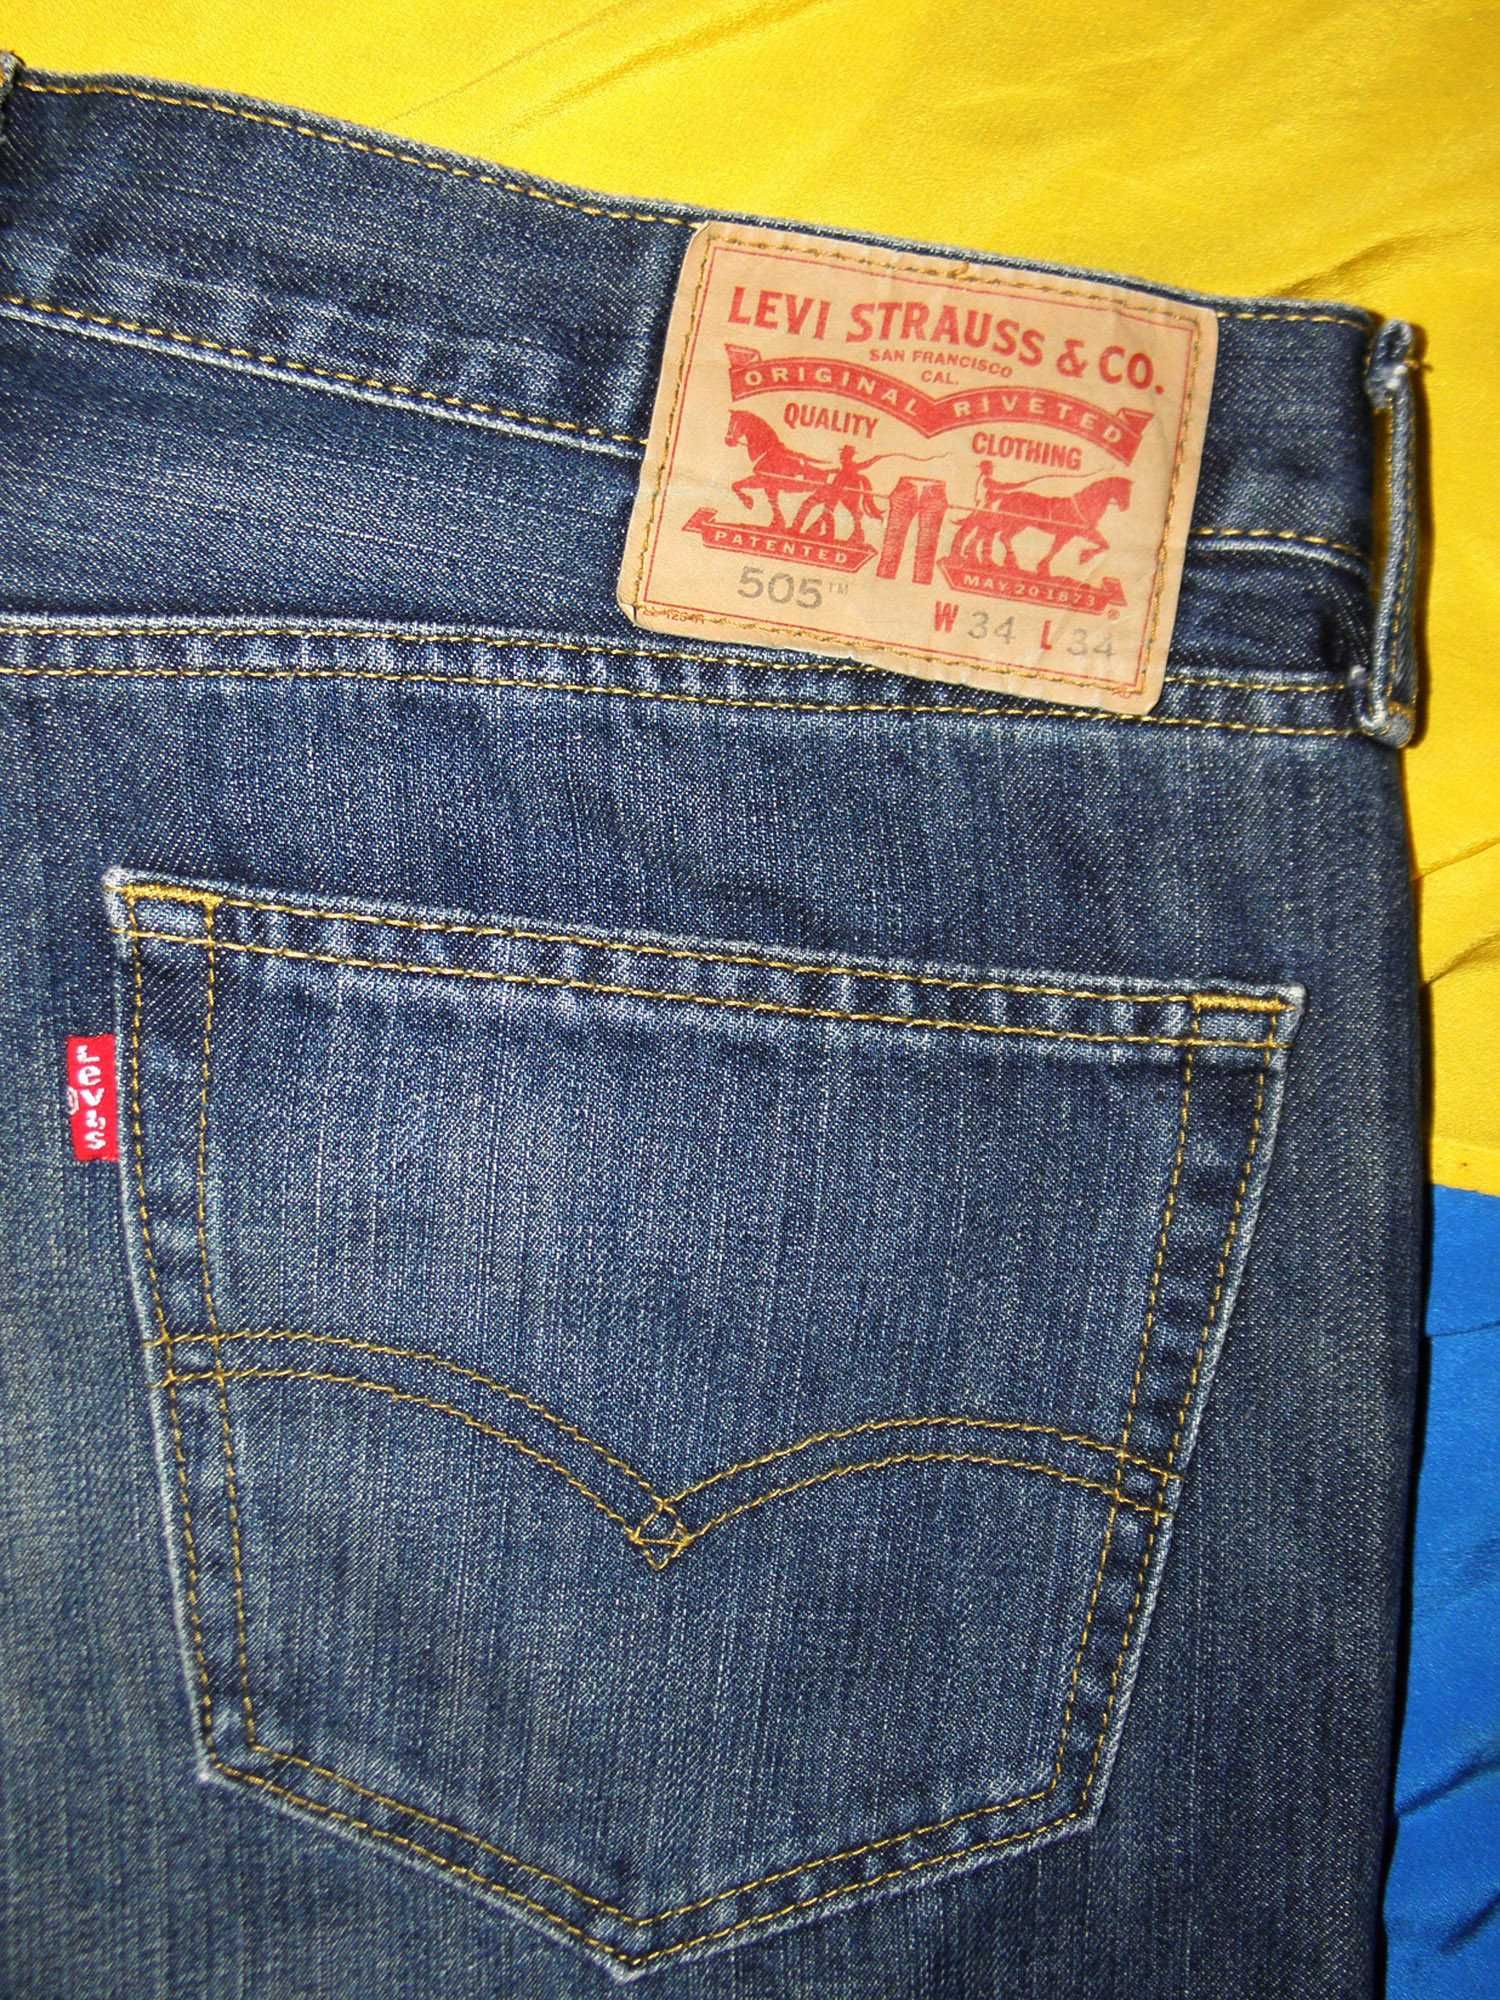 джинсы levi's 505 w34 l 34 синие оригинал levis 501 wrangler